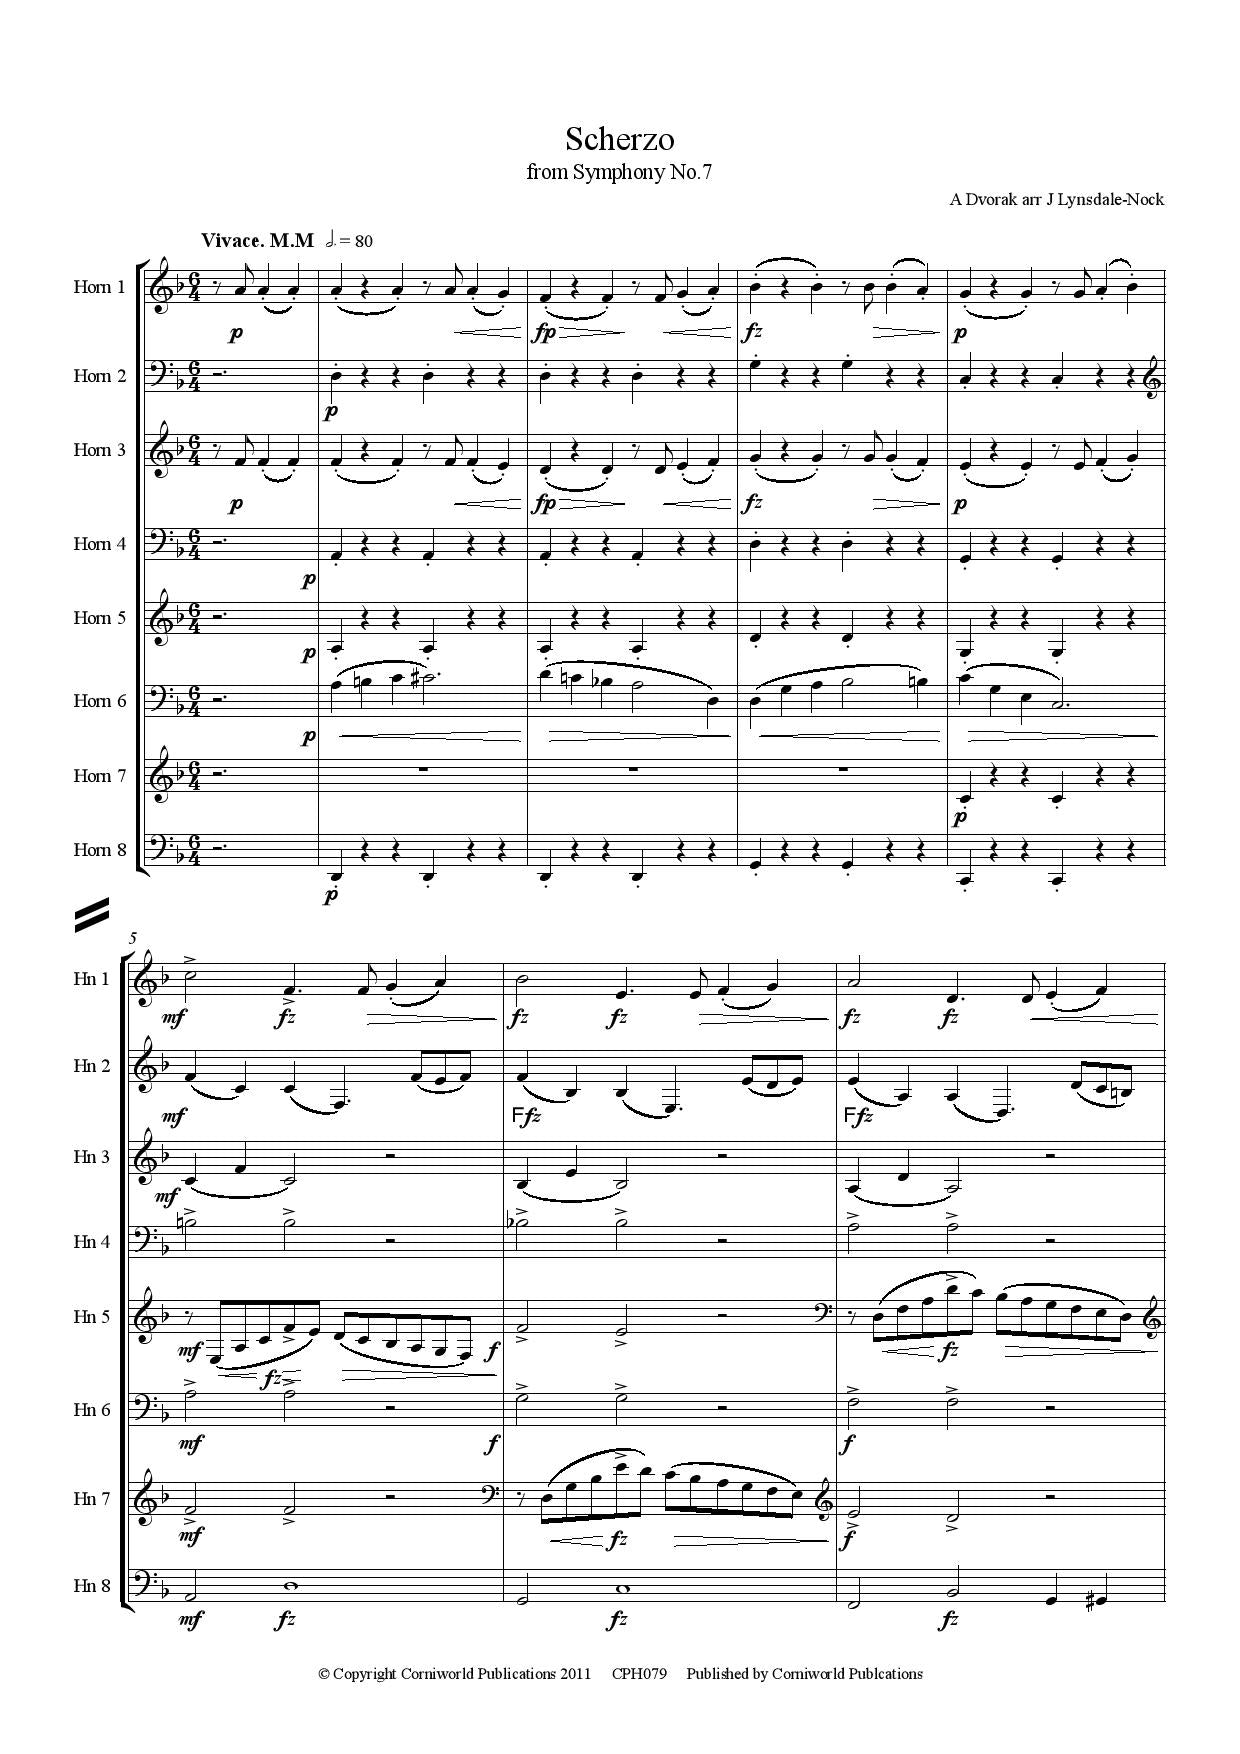 Scherzo from Symphony No.7 CPH079